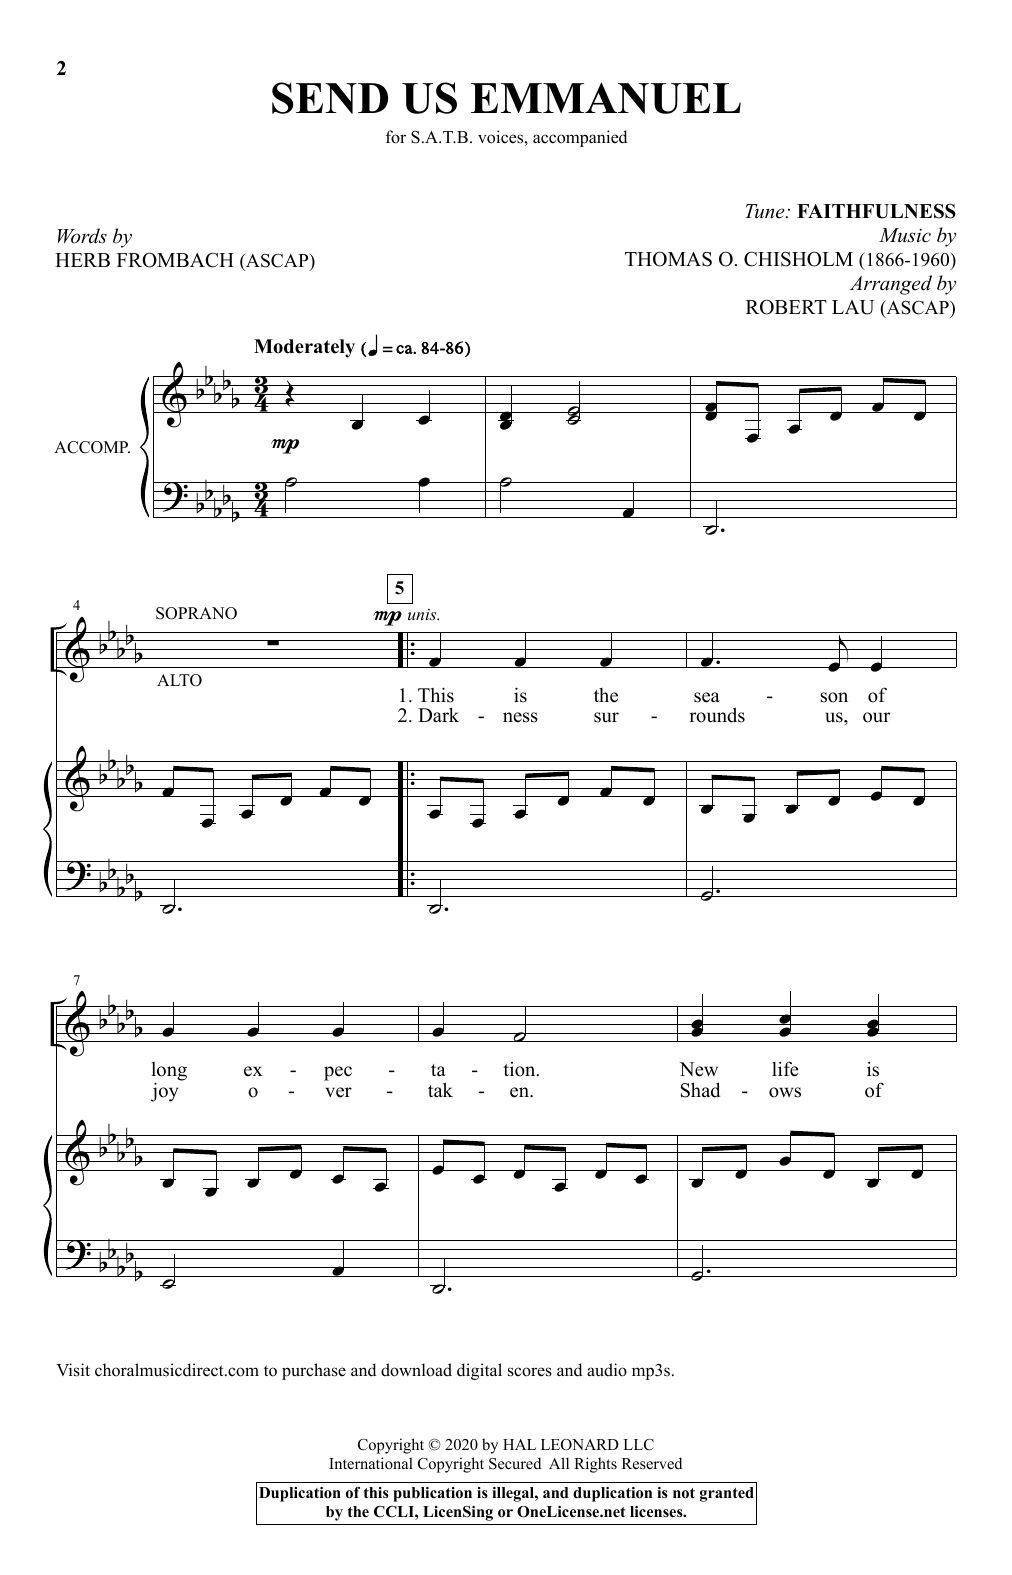 Thomas O. Chisholm Send Us Emmanuel (arr. Robert Lau) sheet music notes and chords arranged for SATB Choir